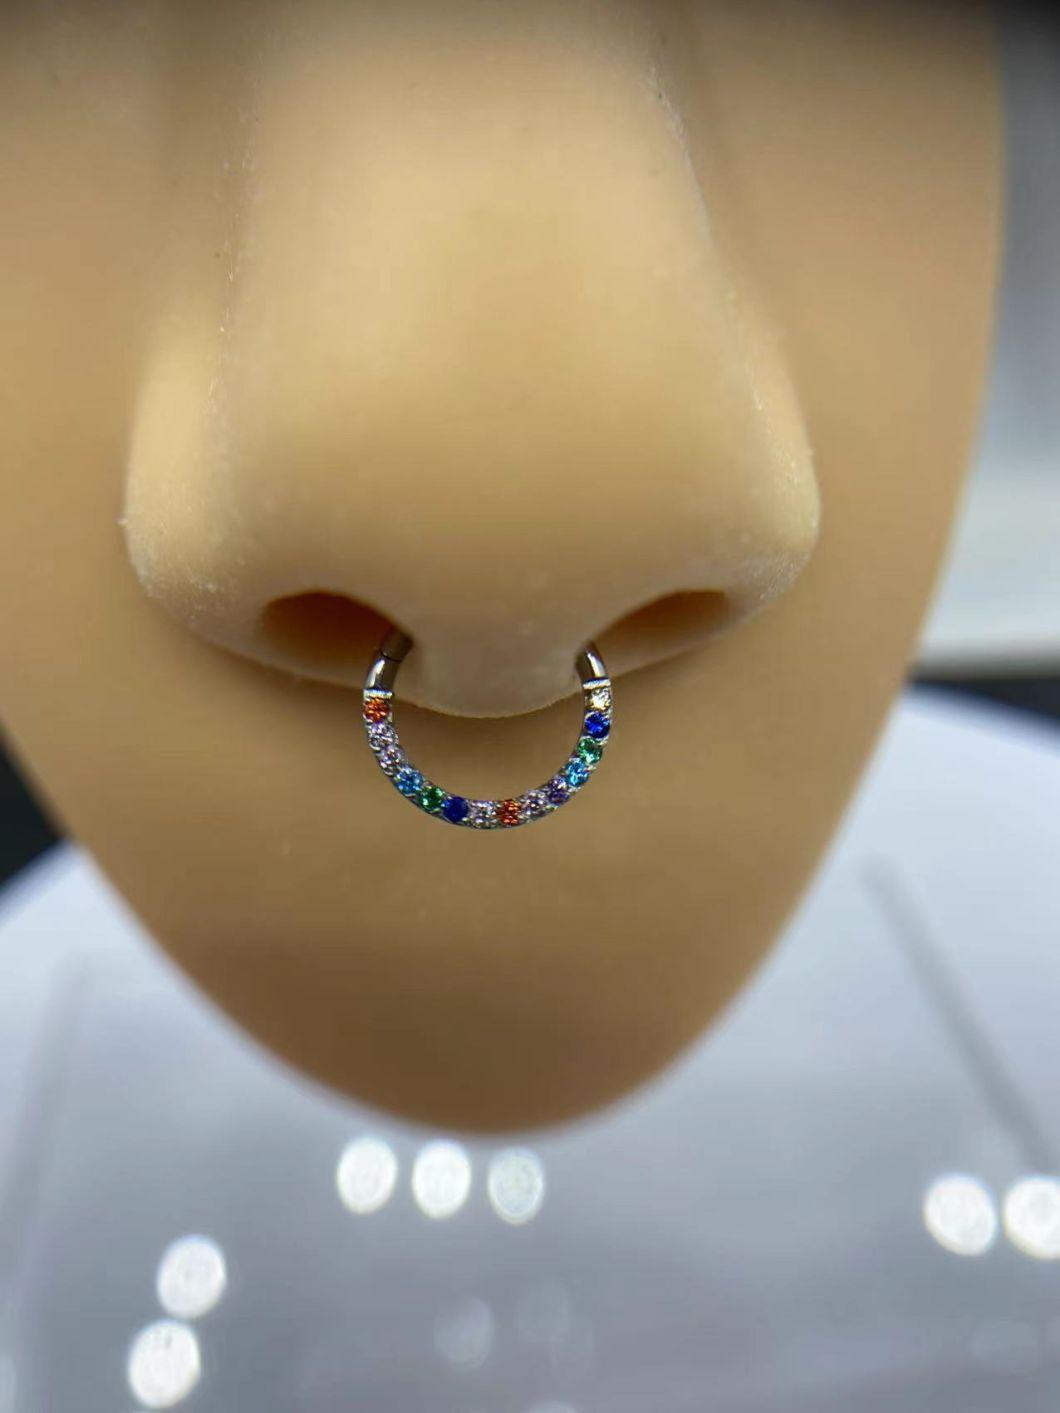 ASTM F136 Titanium Setting Colorful Zirconia Hinged Segment Clicker Body Piercing Jewelry